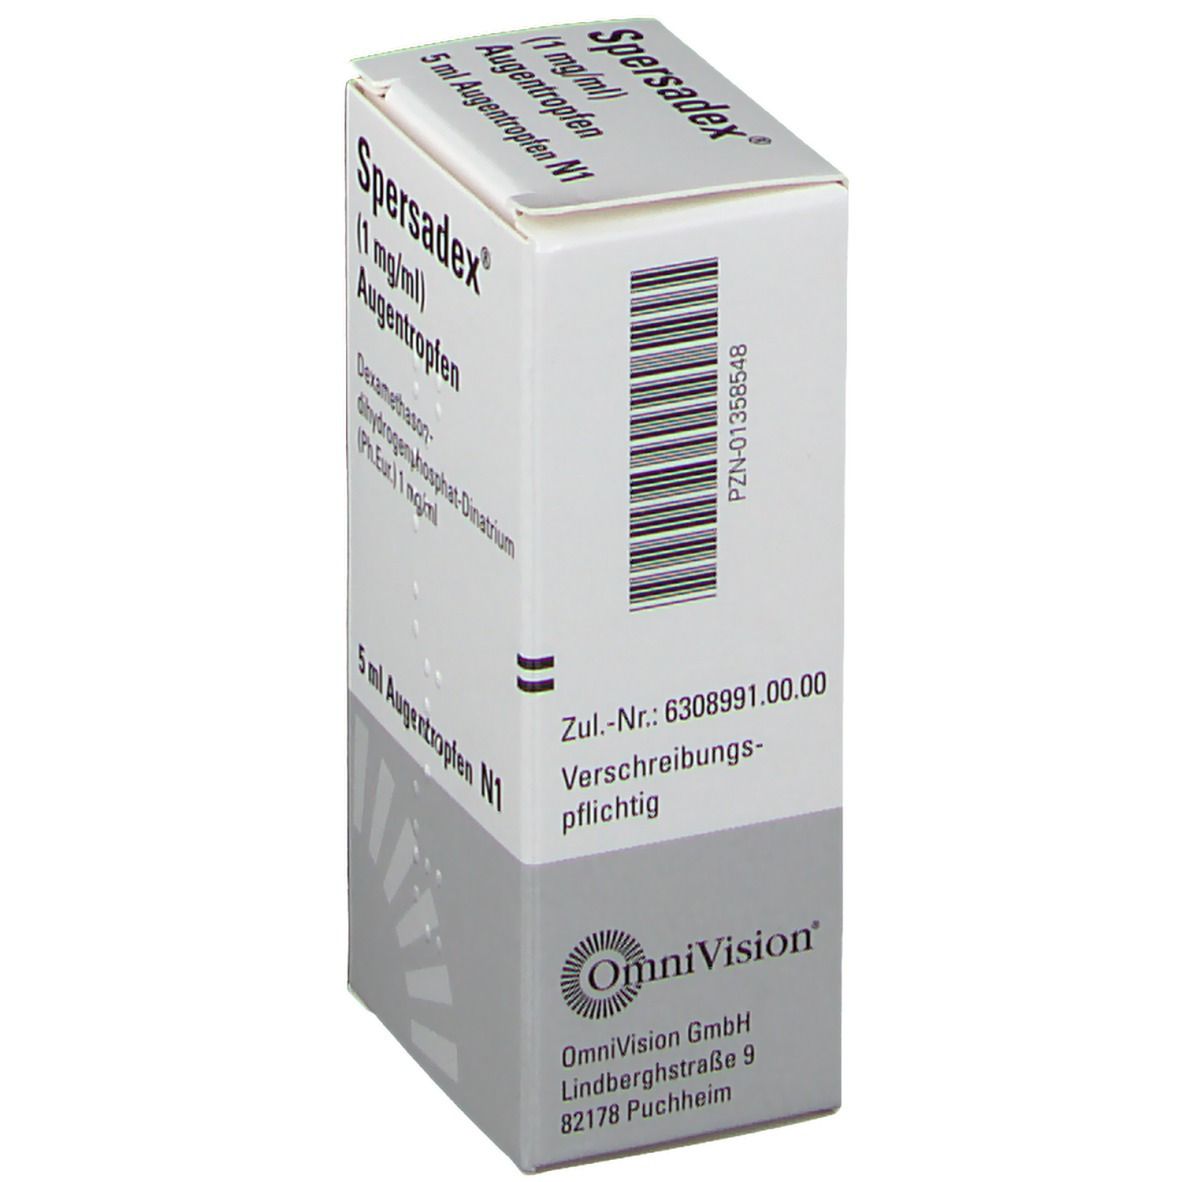 Spersadex® 1 mg/ml